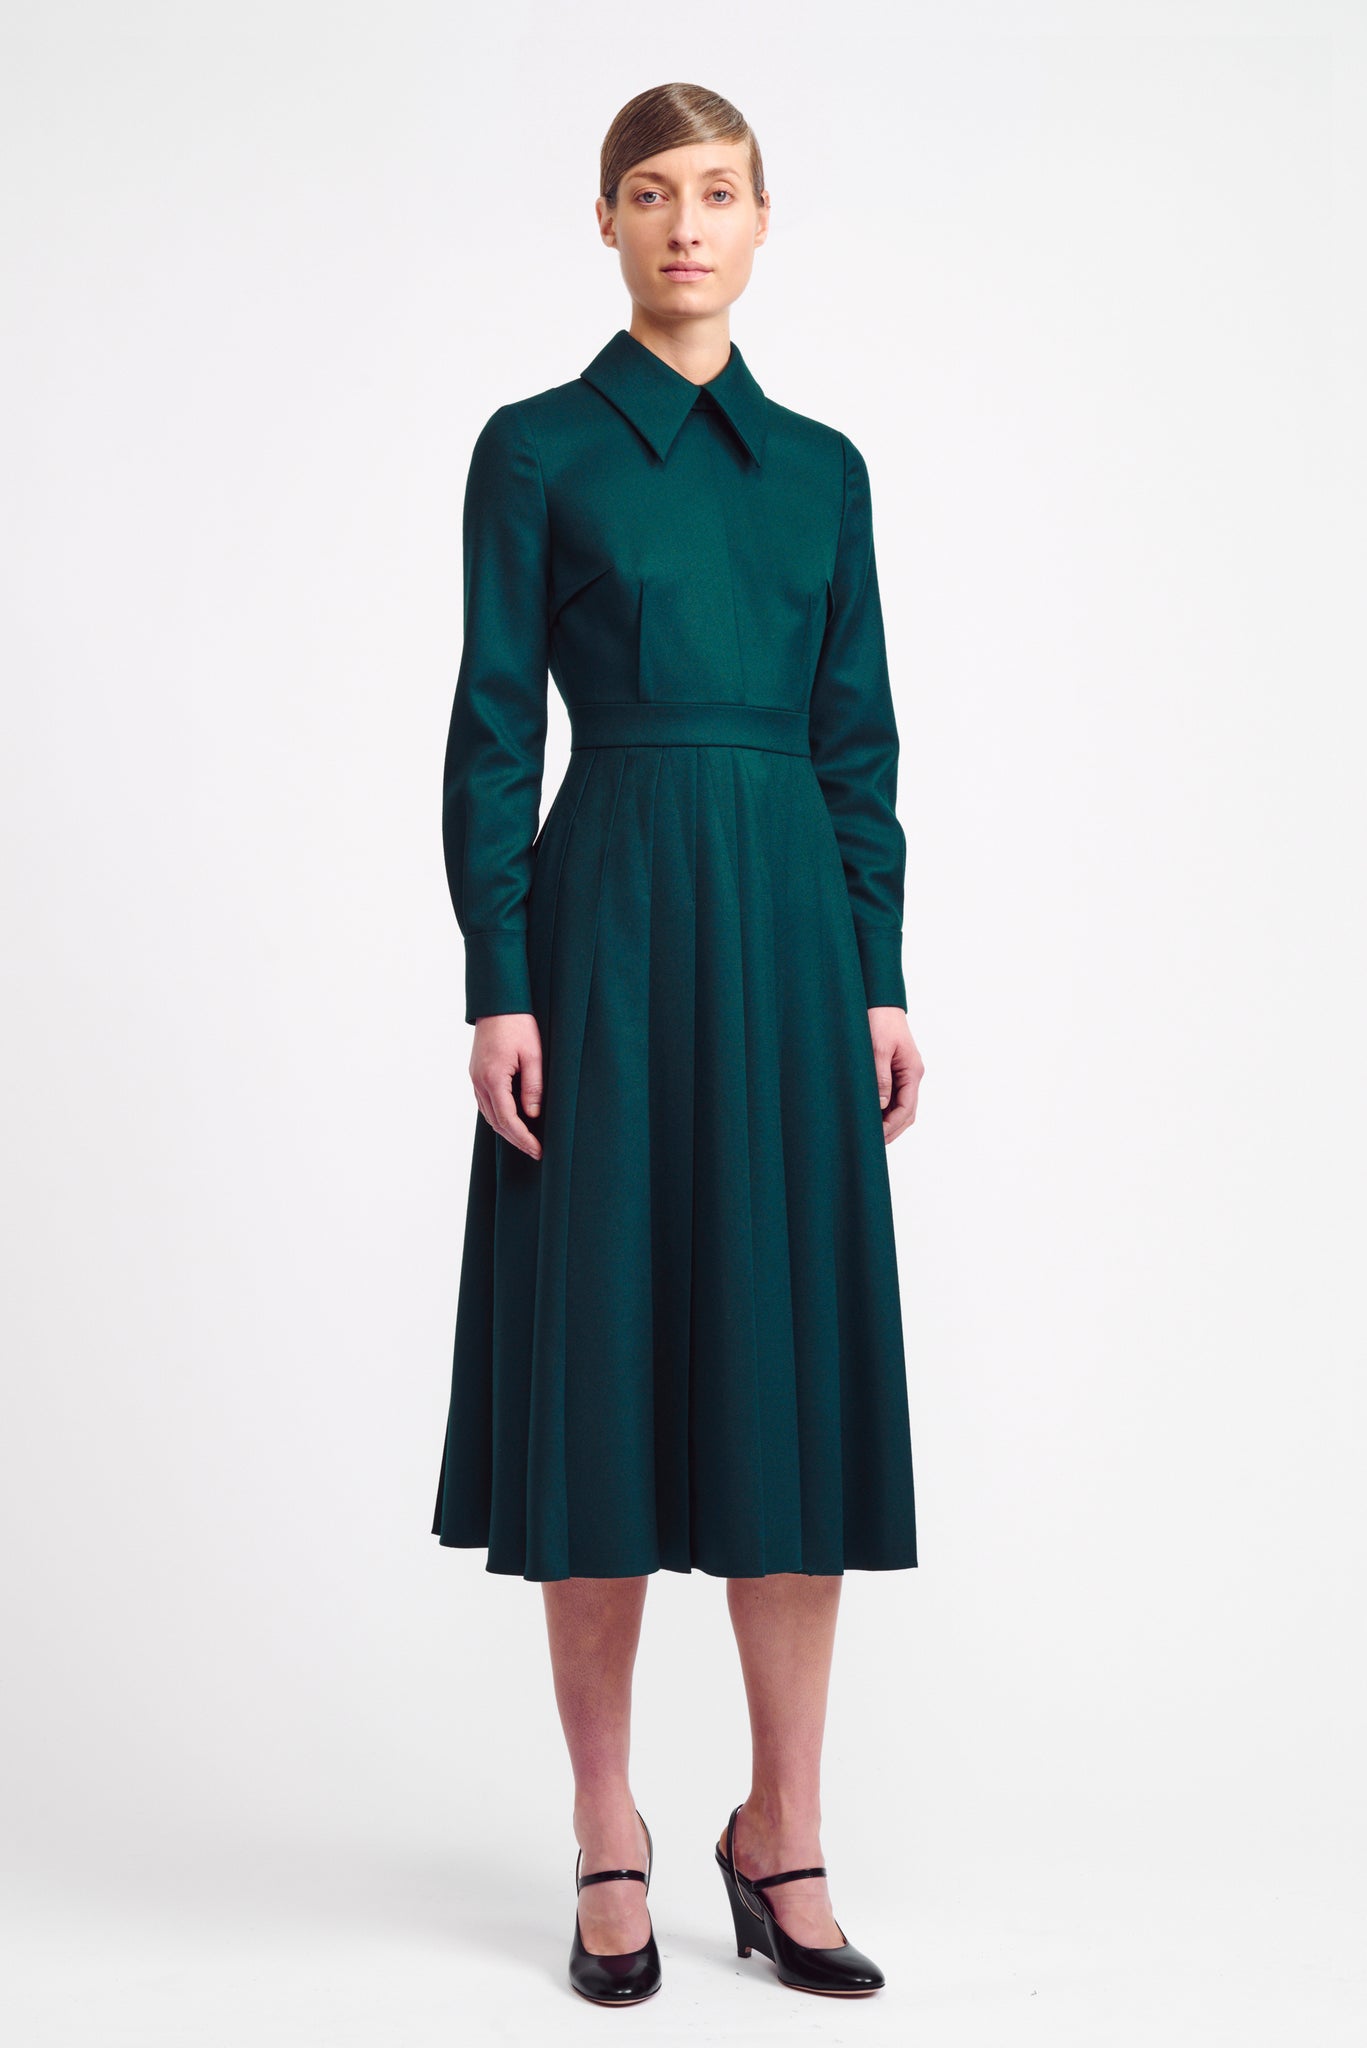 Emilia Wickstead - Maram Shirt Dress in Emerald Green Flanella